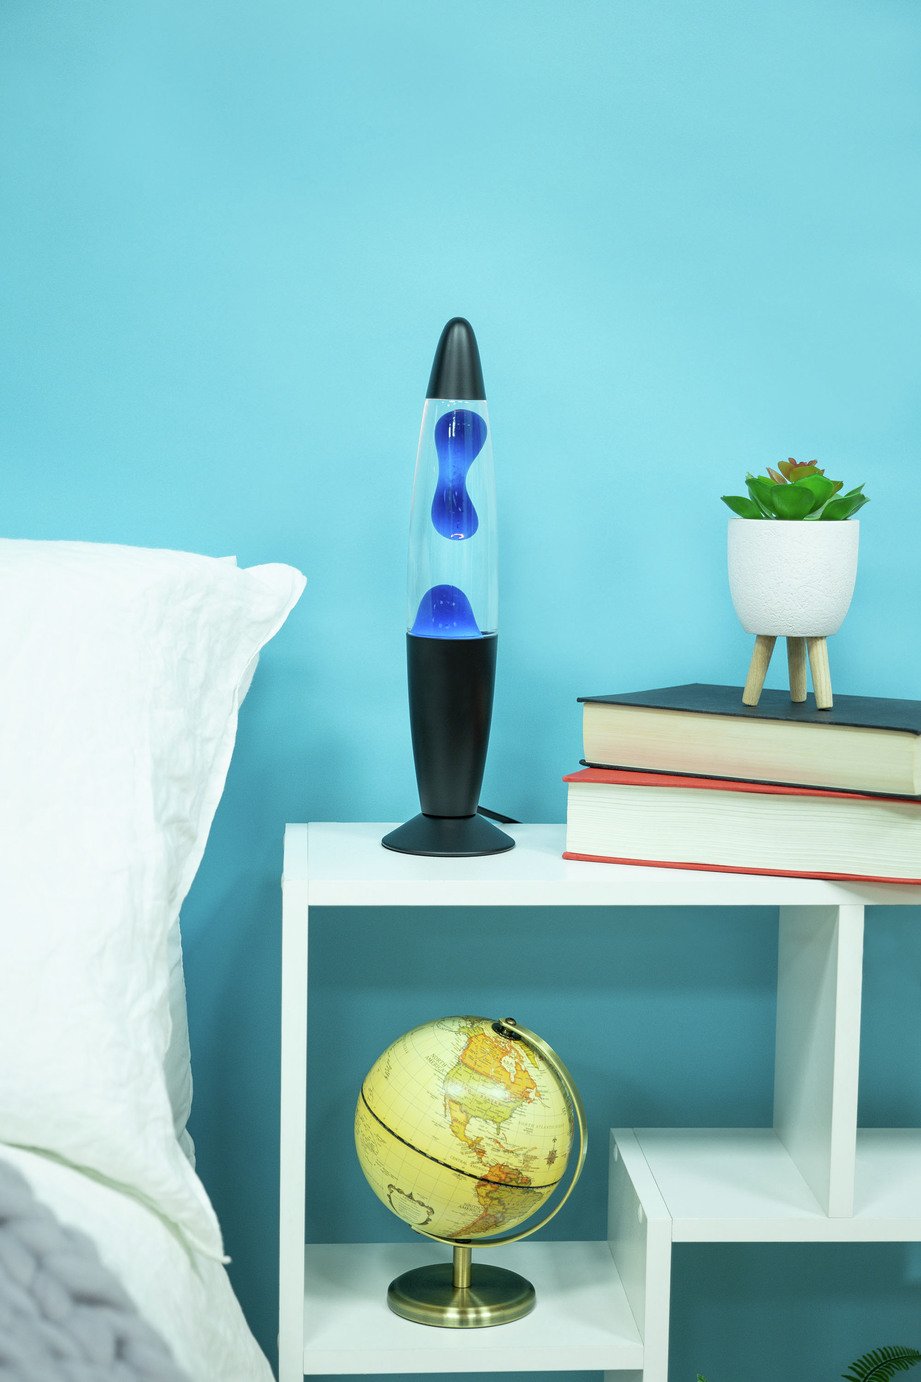 Fizz Creations Lava Lamp - Blue